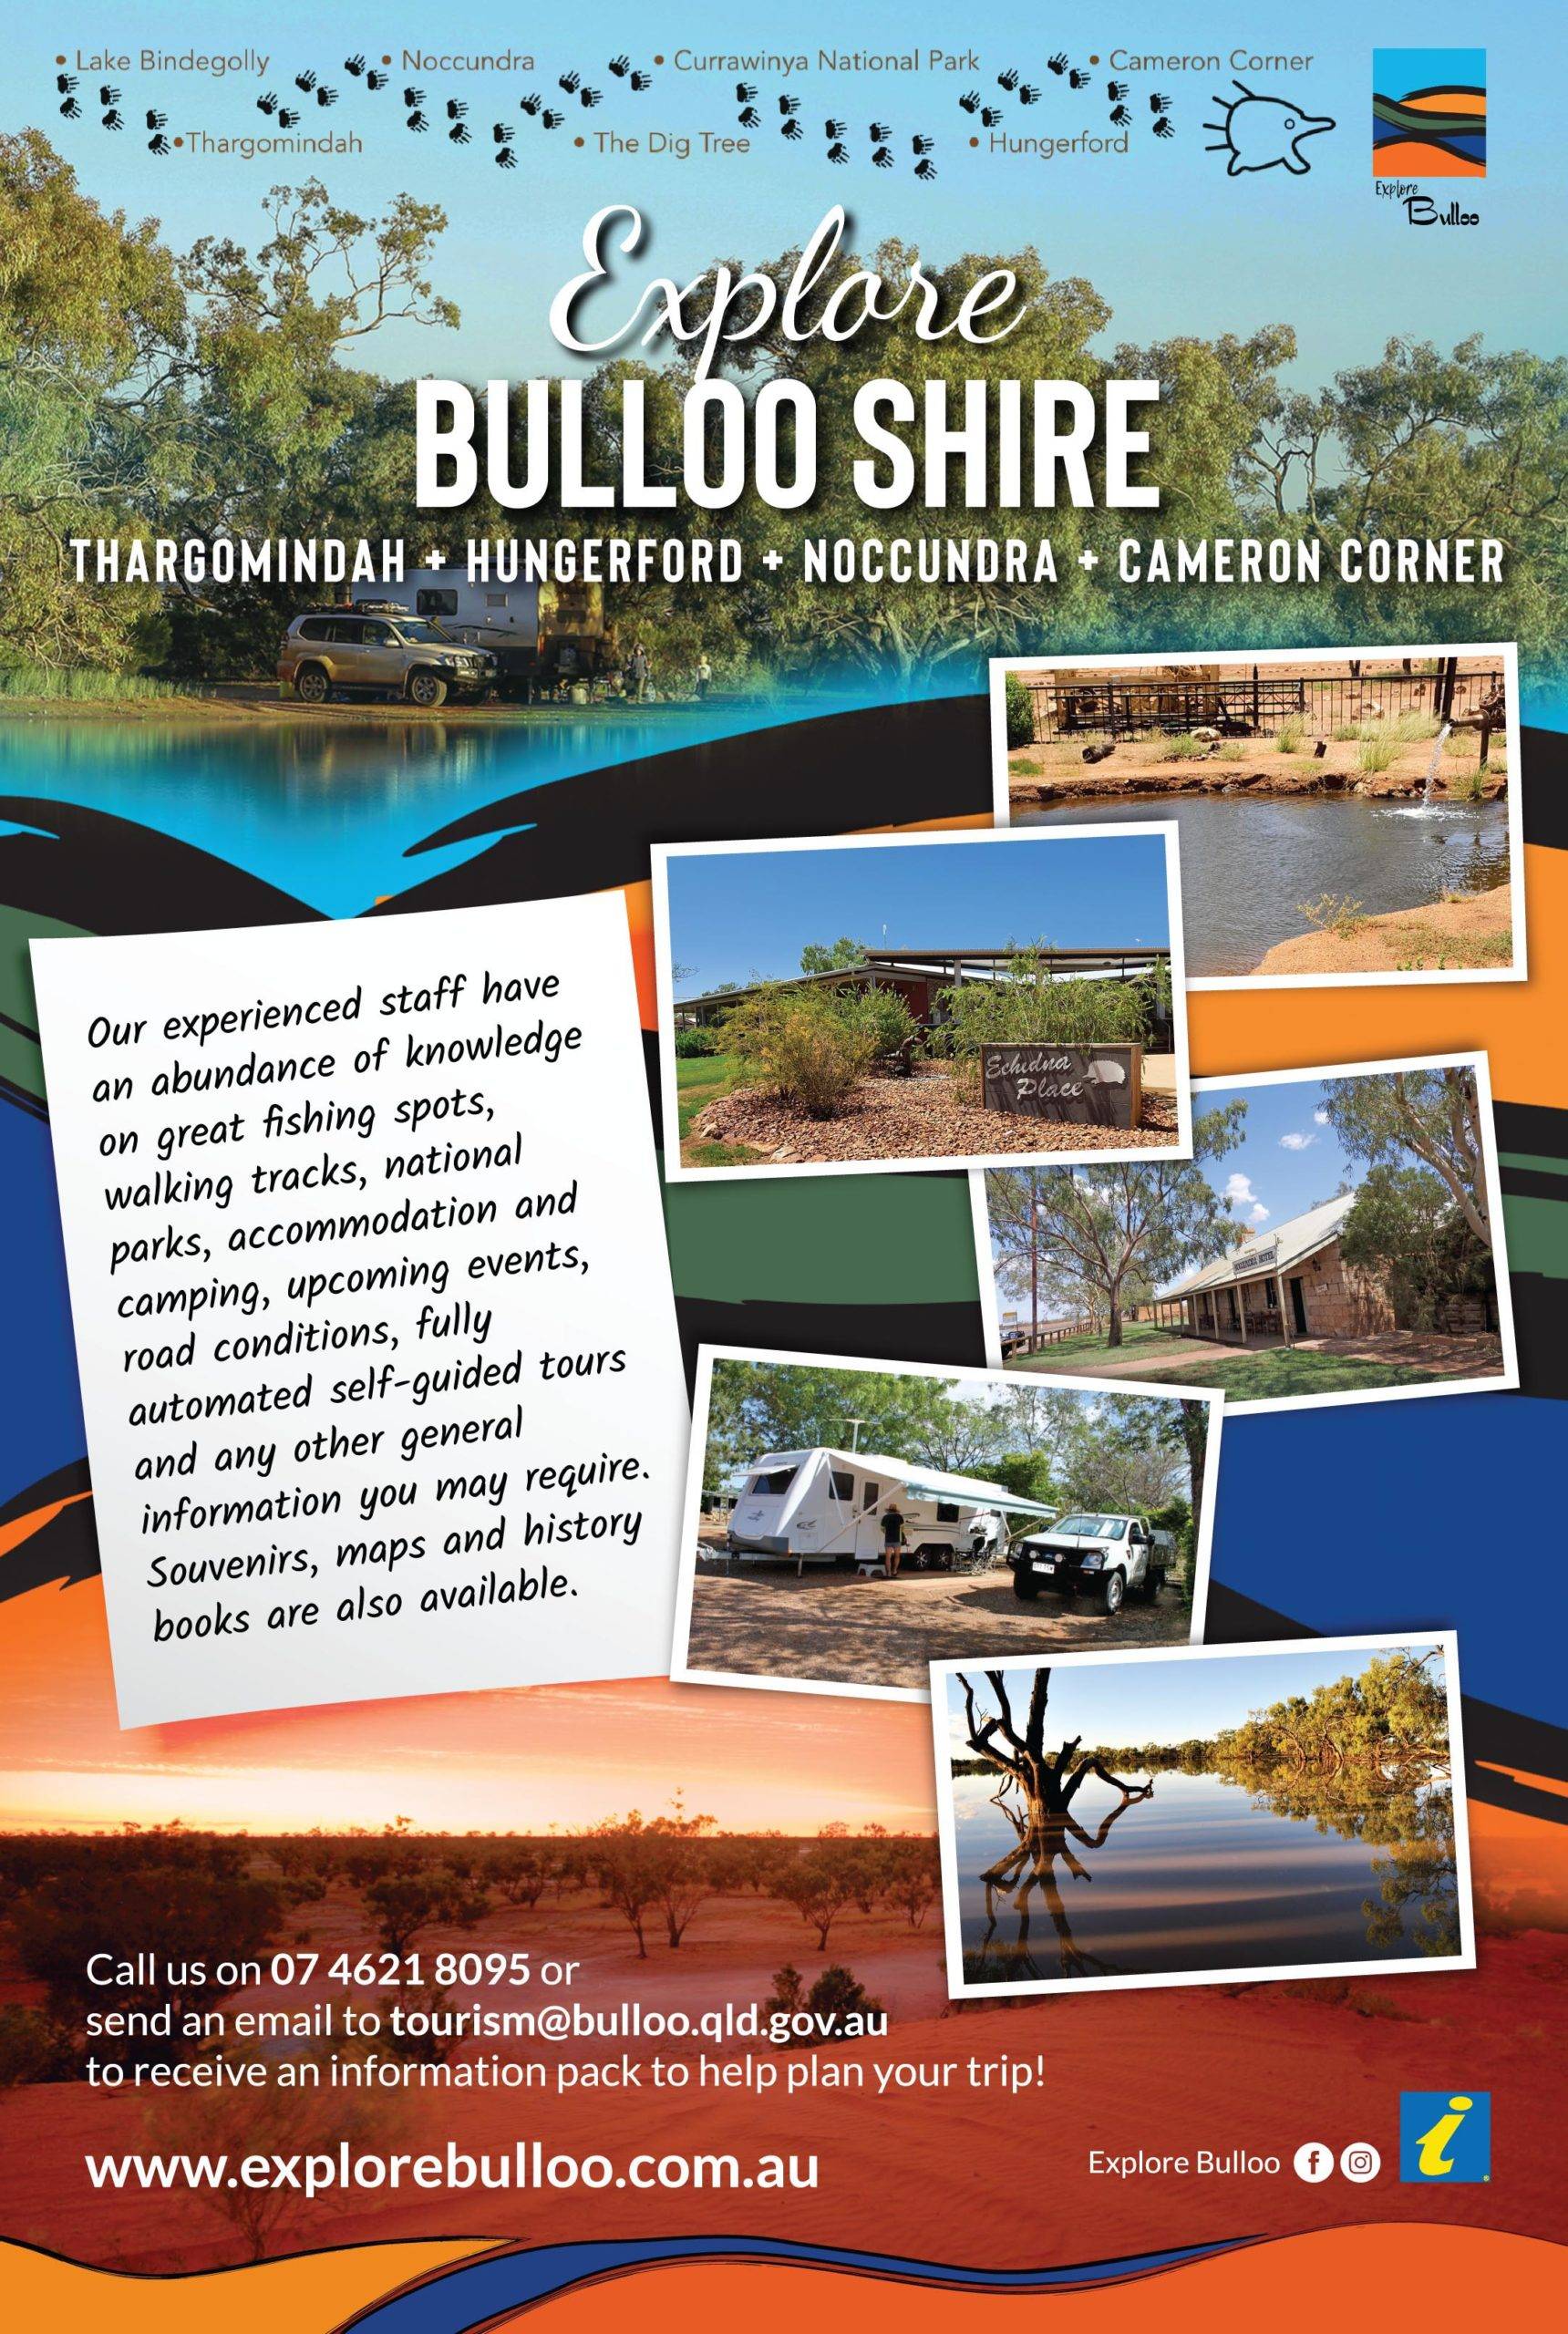 Explore the Bulloo Shire